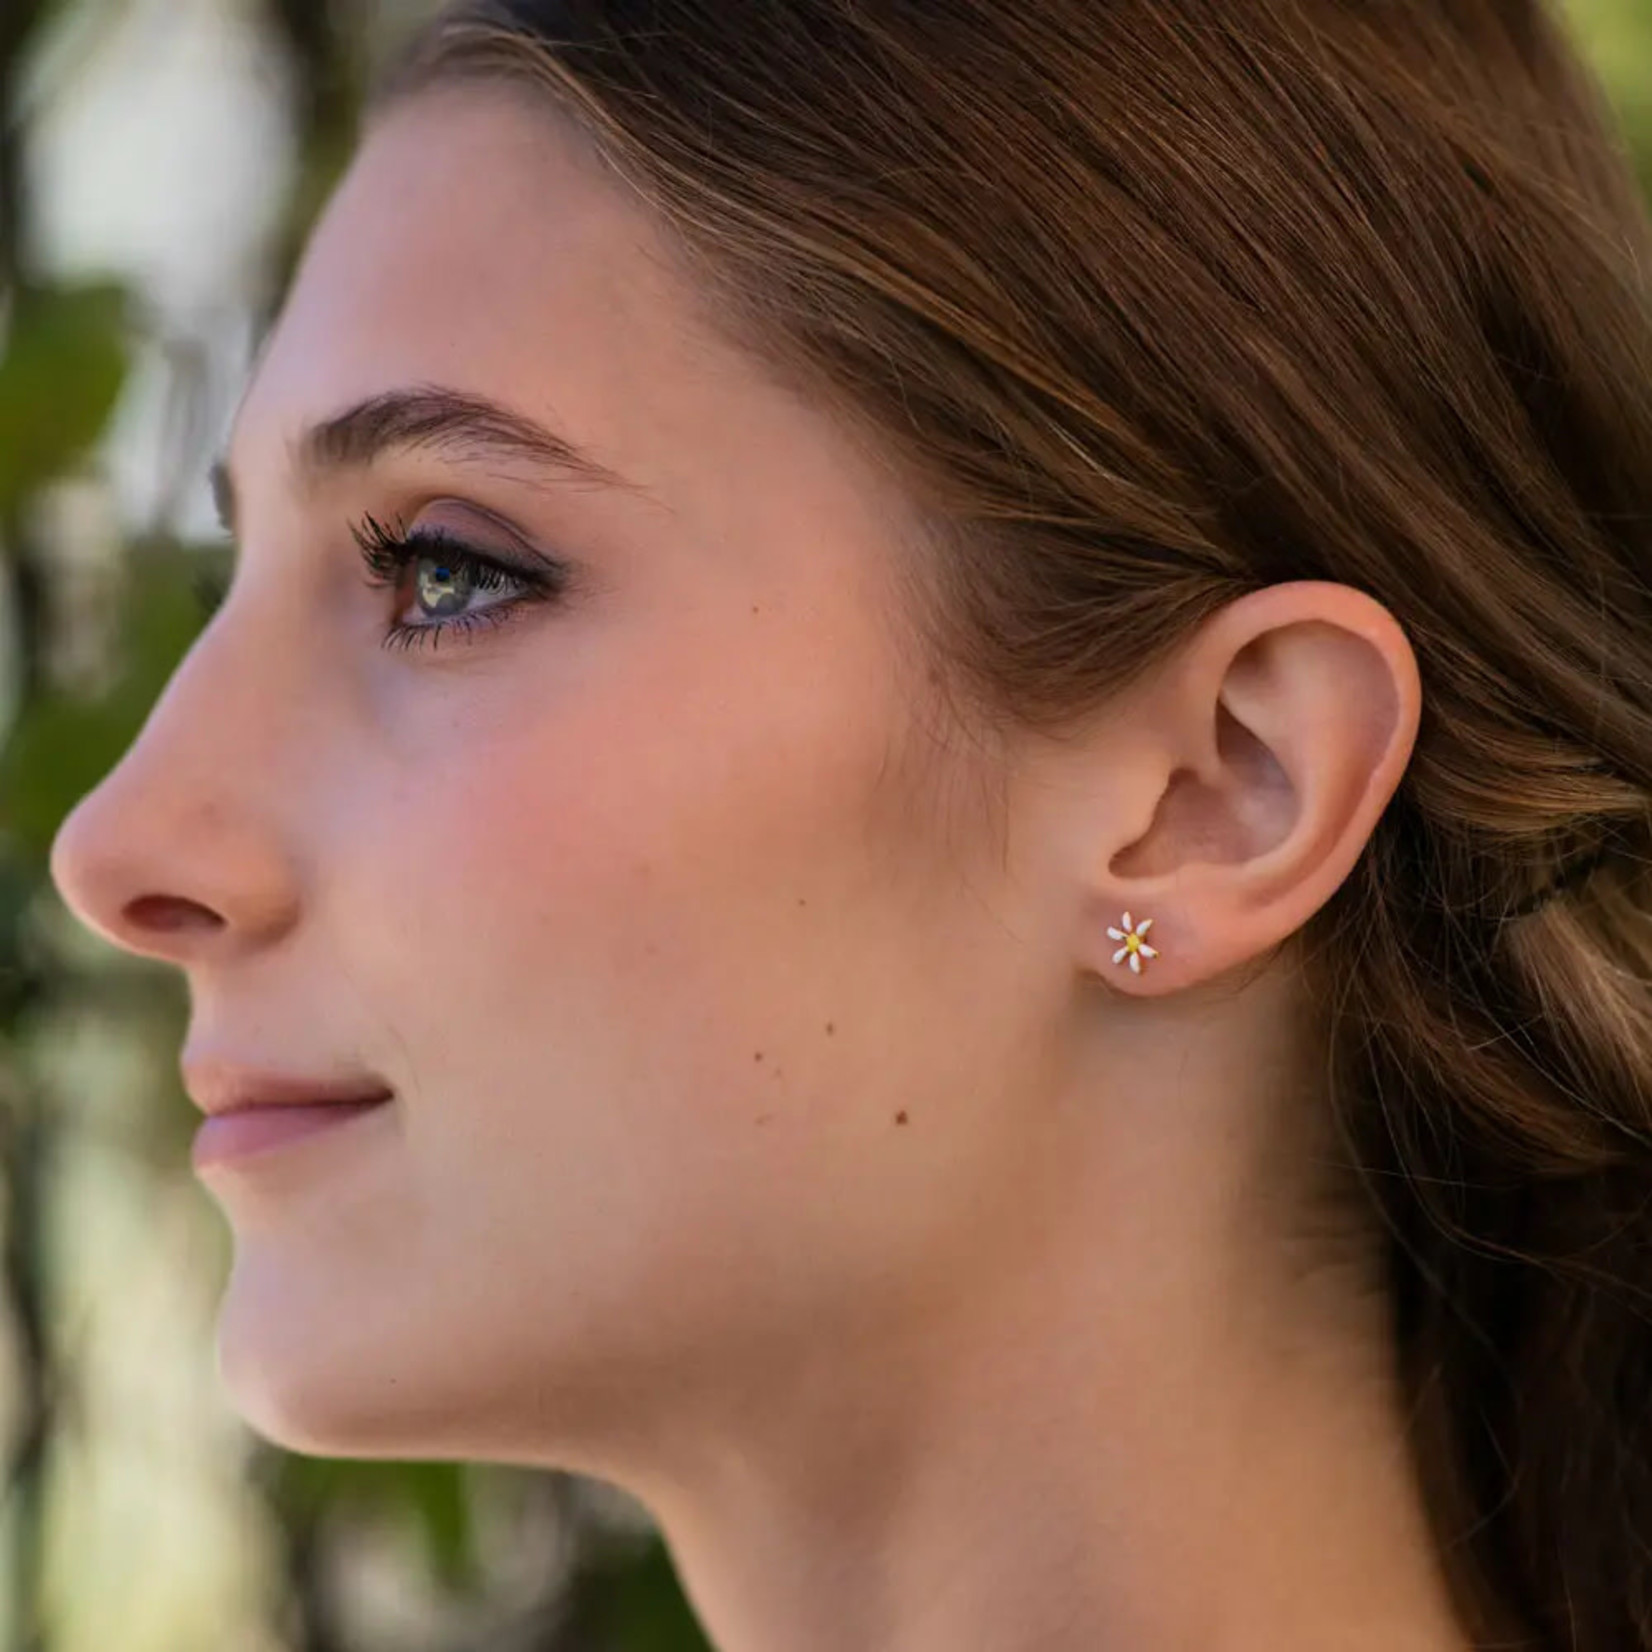 Daisy Stud Earrings - White Petals